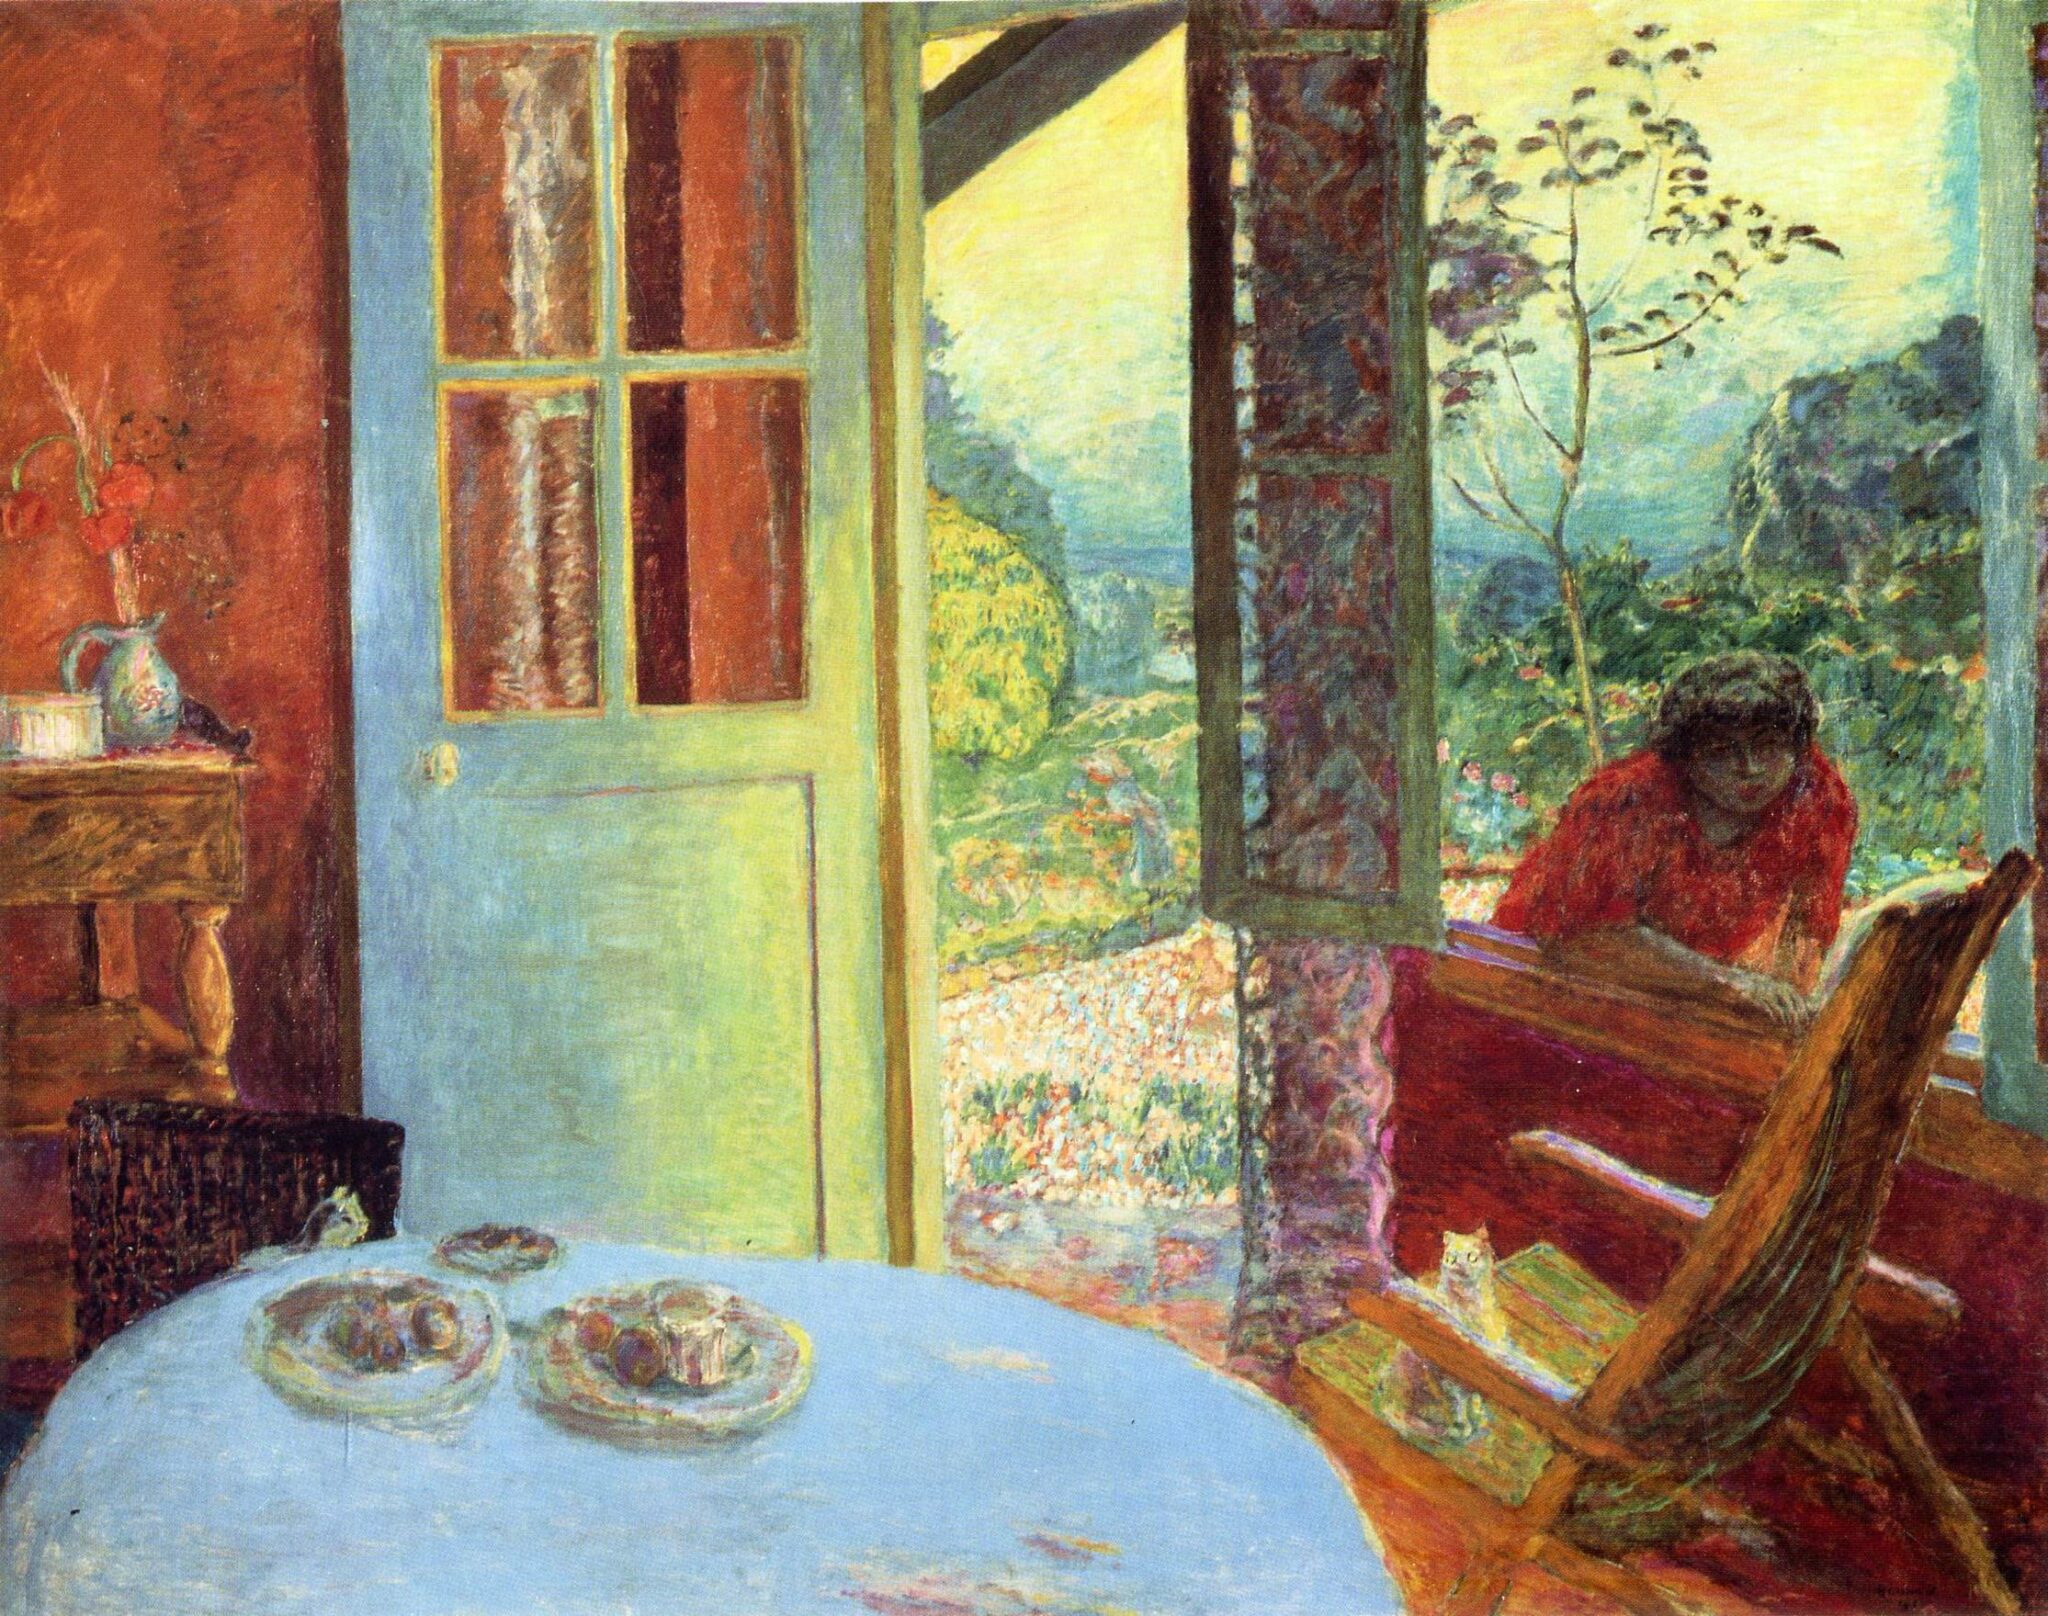 Jadalnia na wsi, 1913 (Pierre Bonnard)